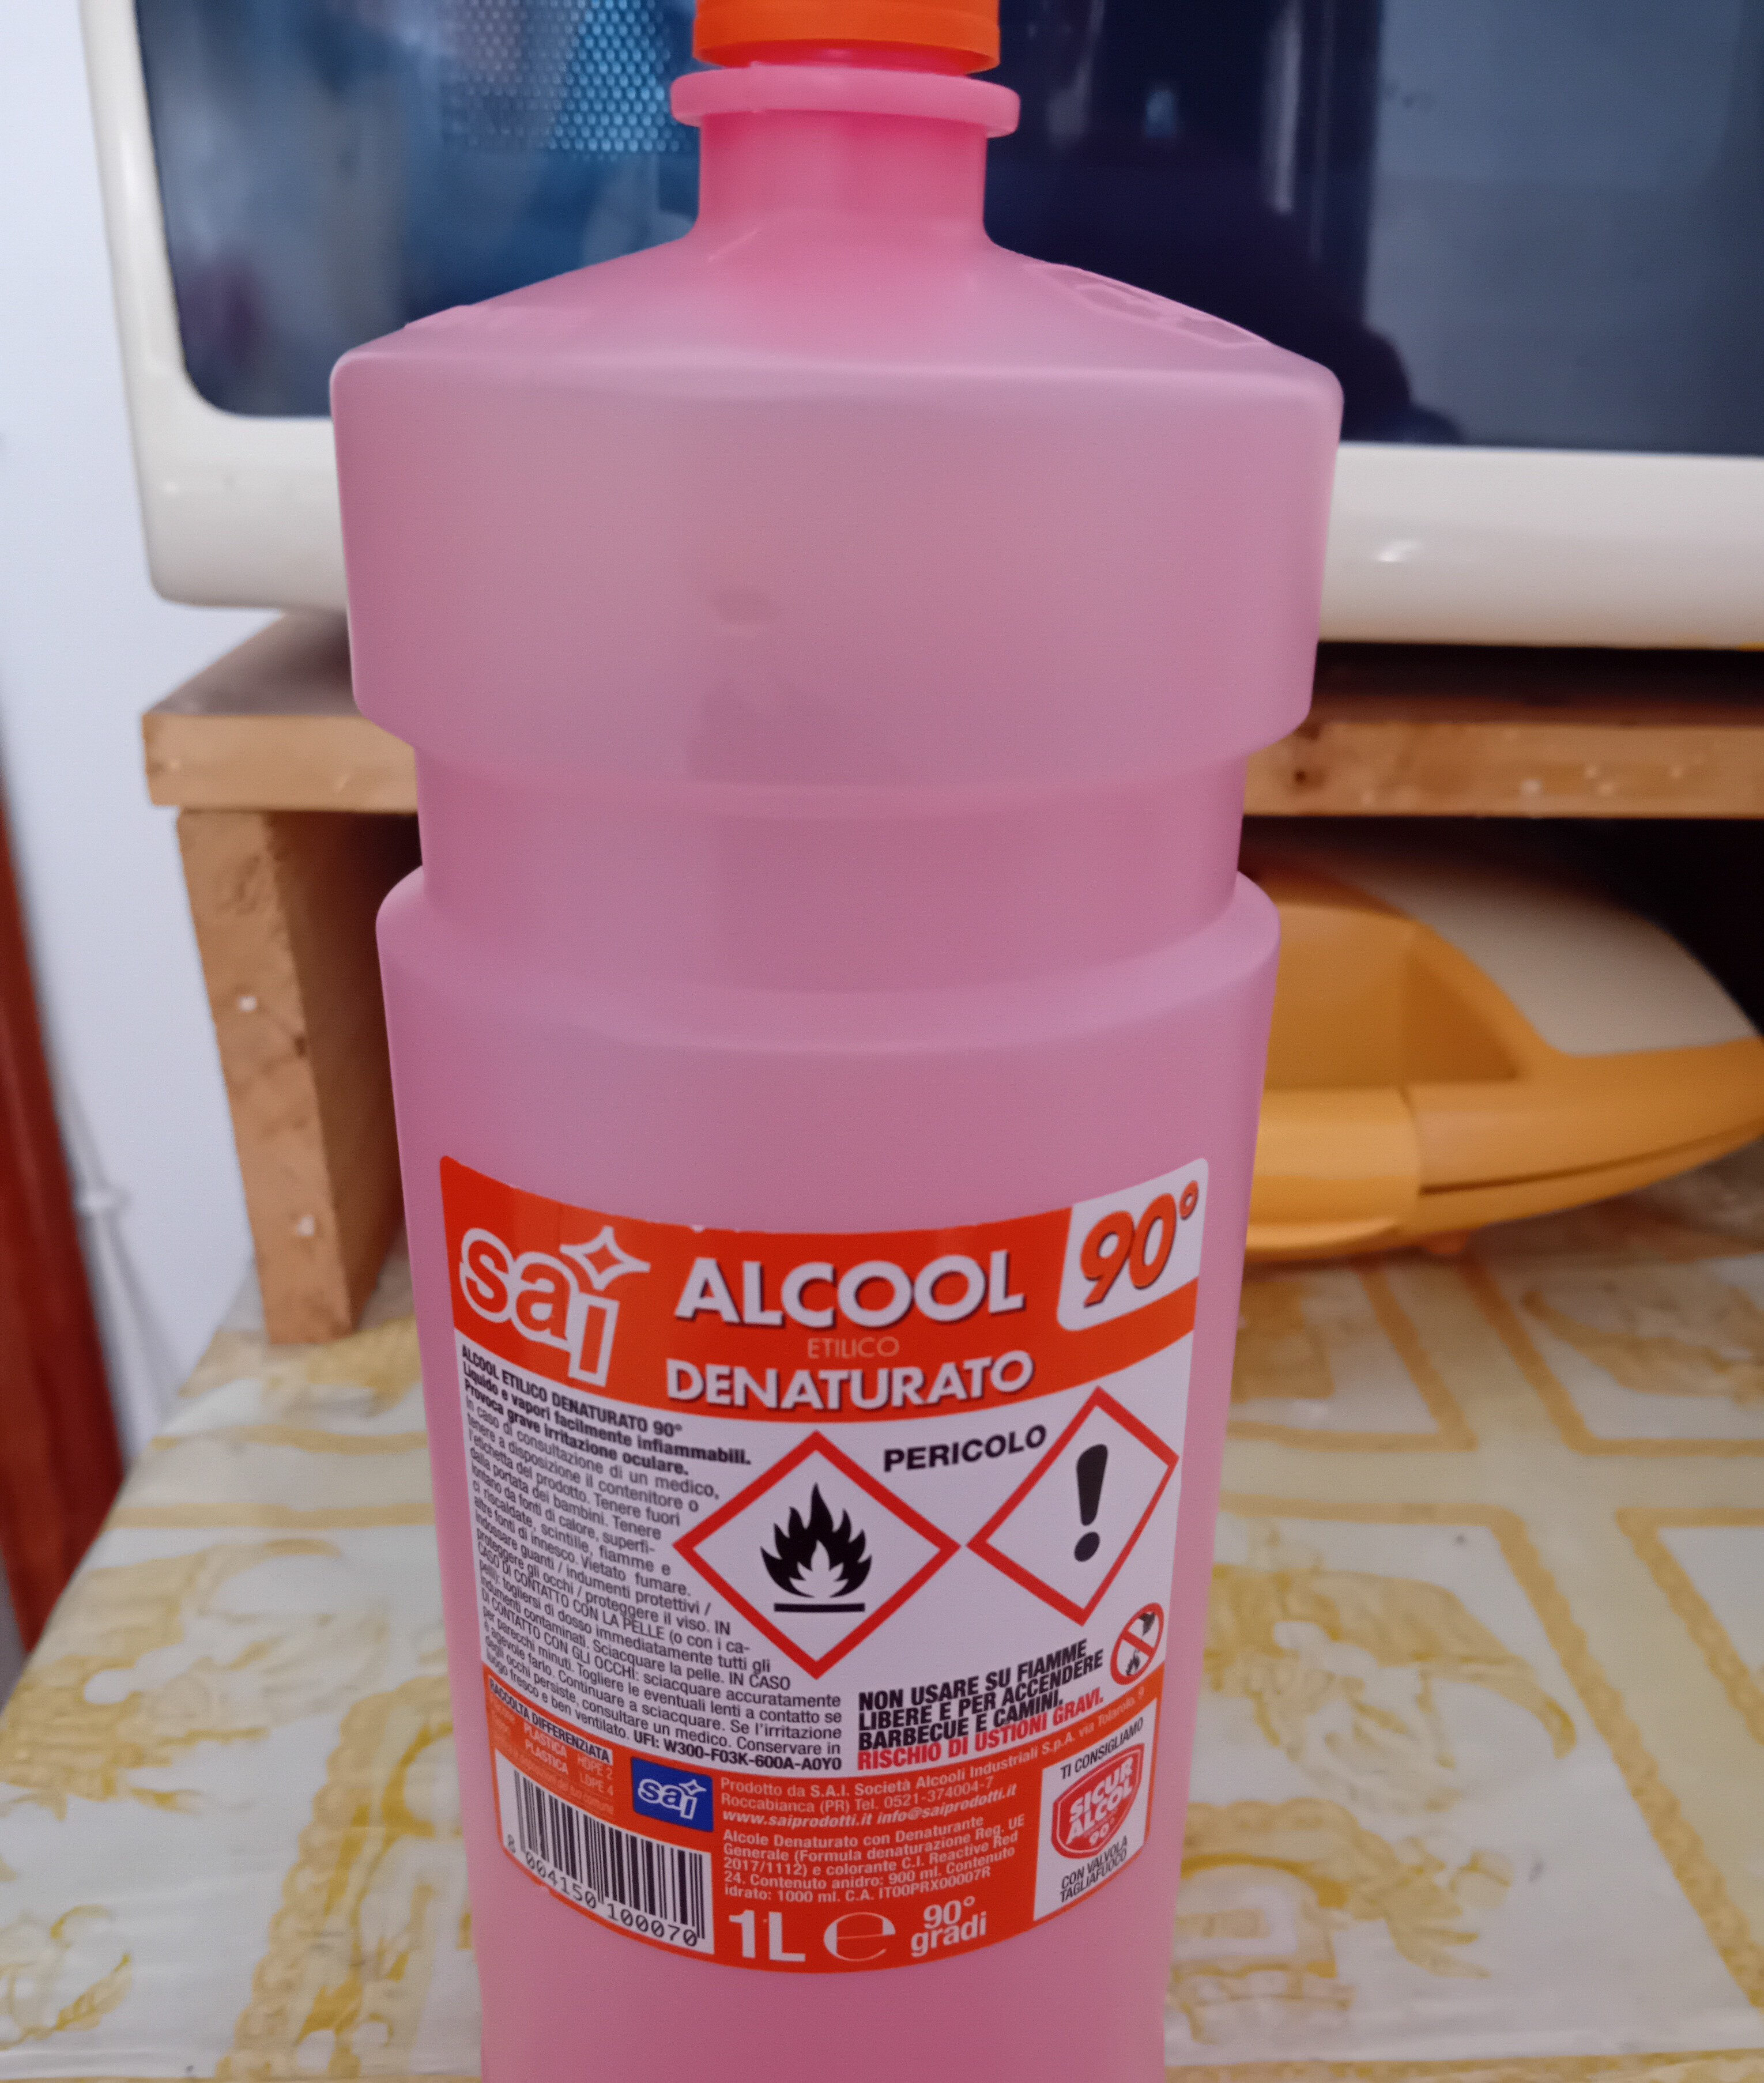 Alcool Etilico Denaturato - Product - it